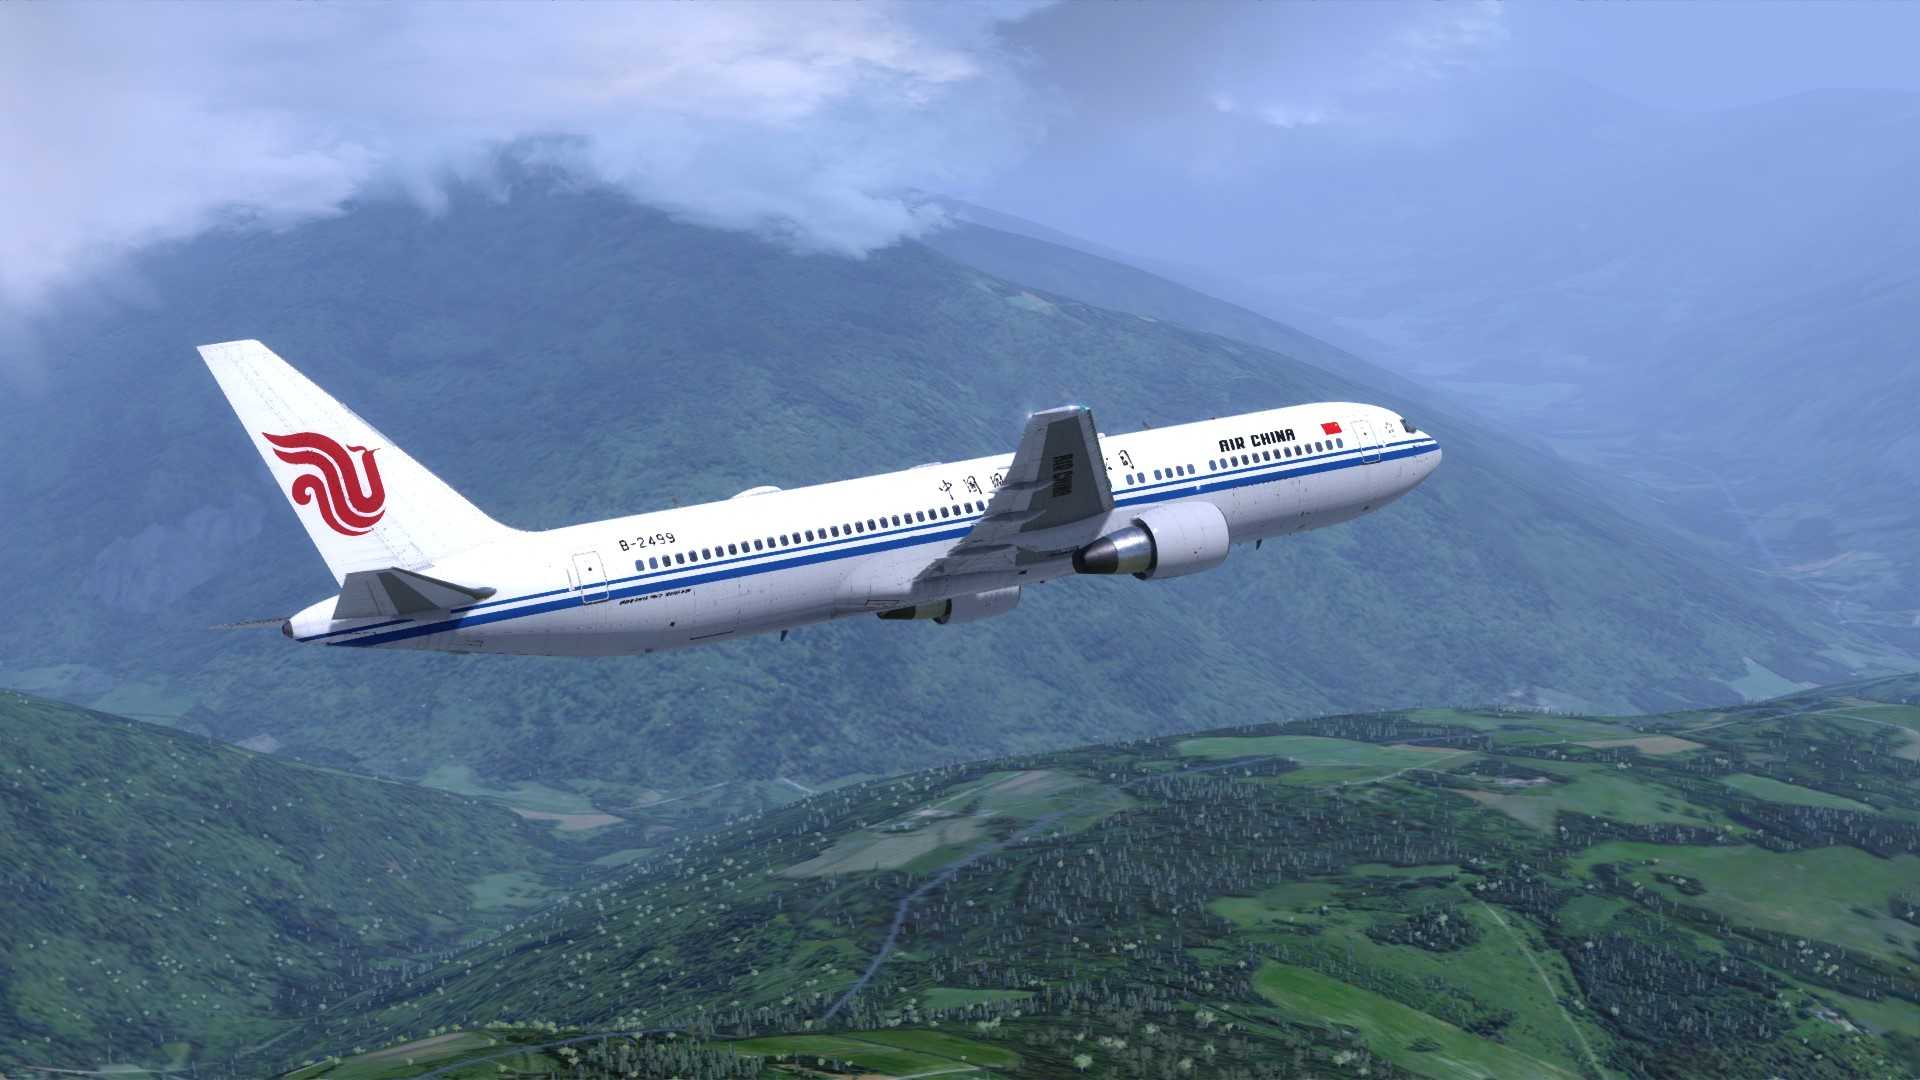 AIR CHINA 767 VNKT-8833 